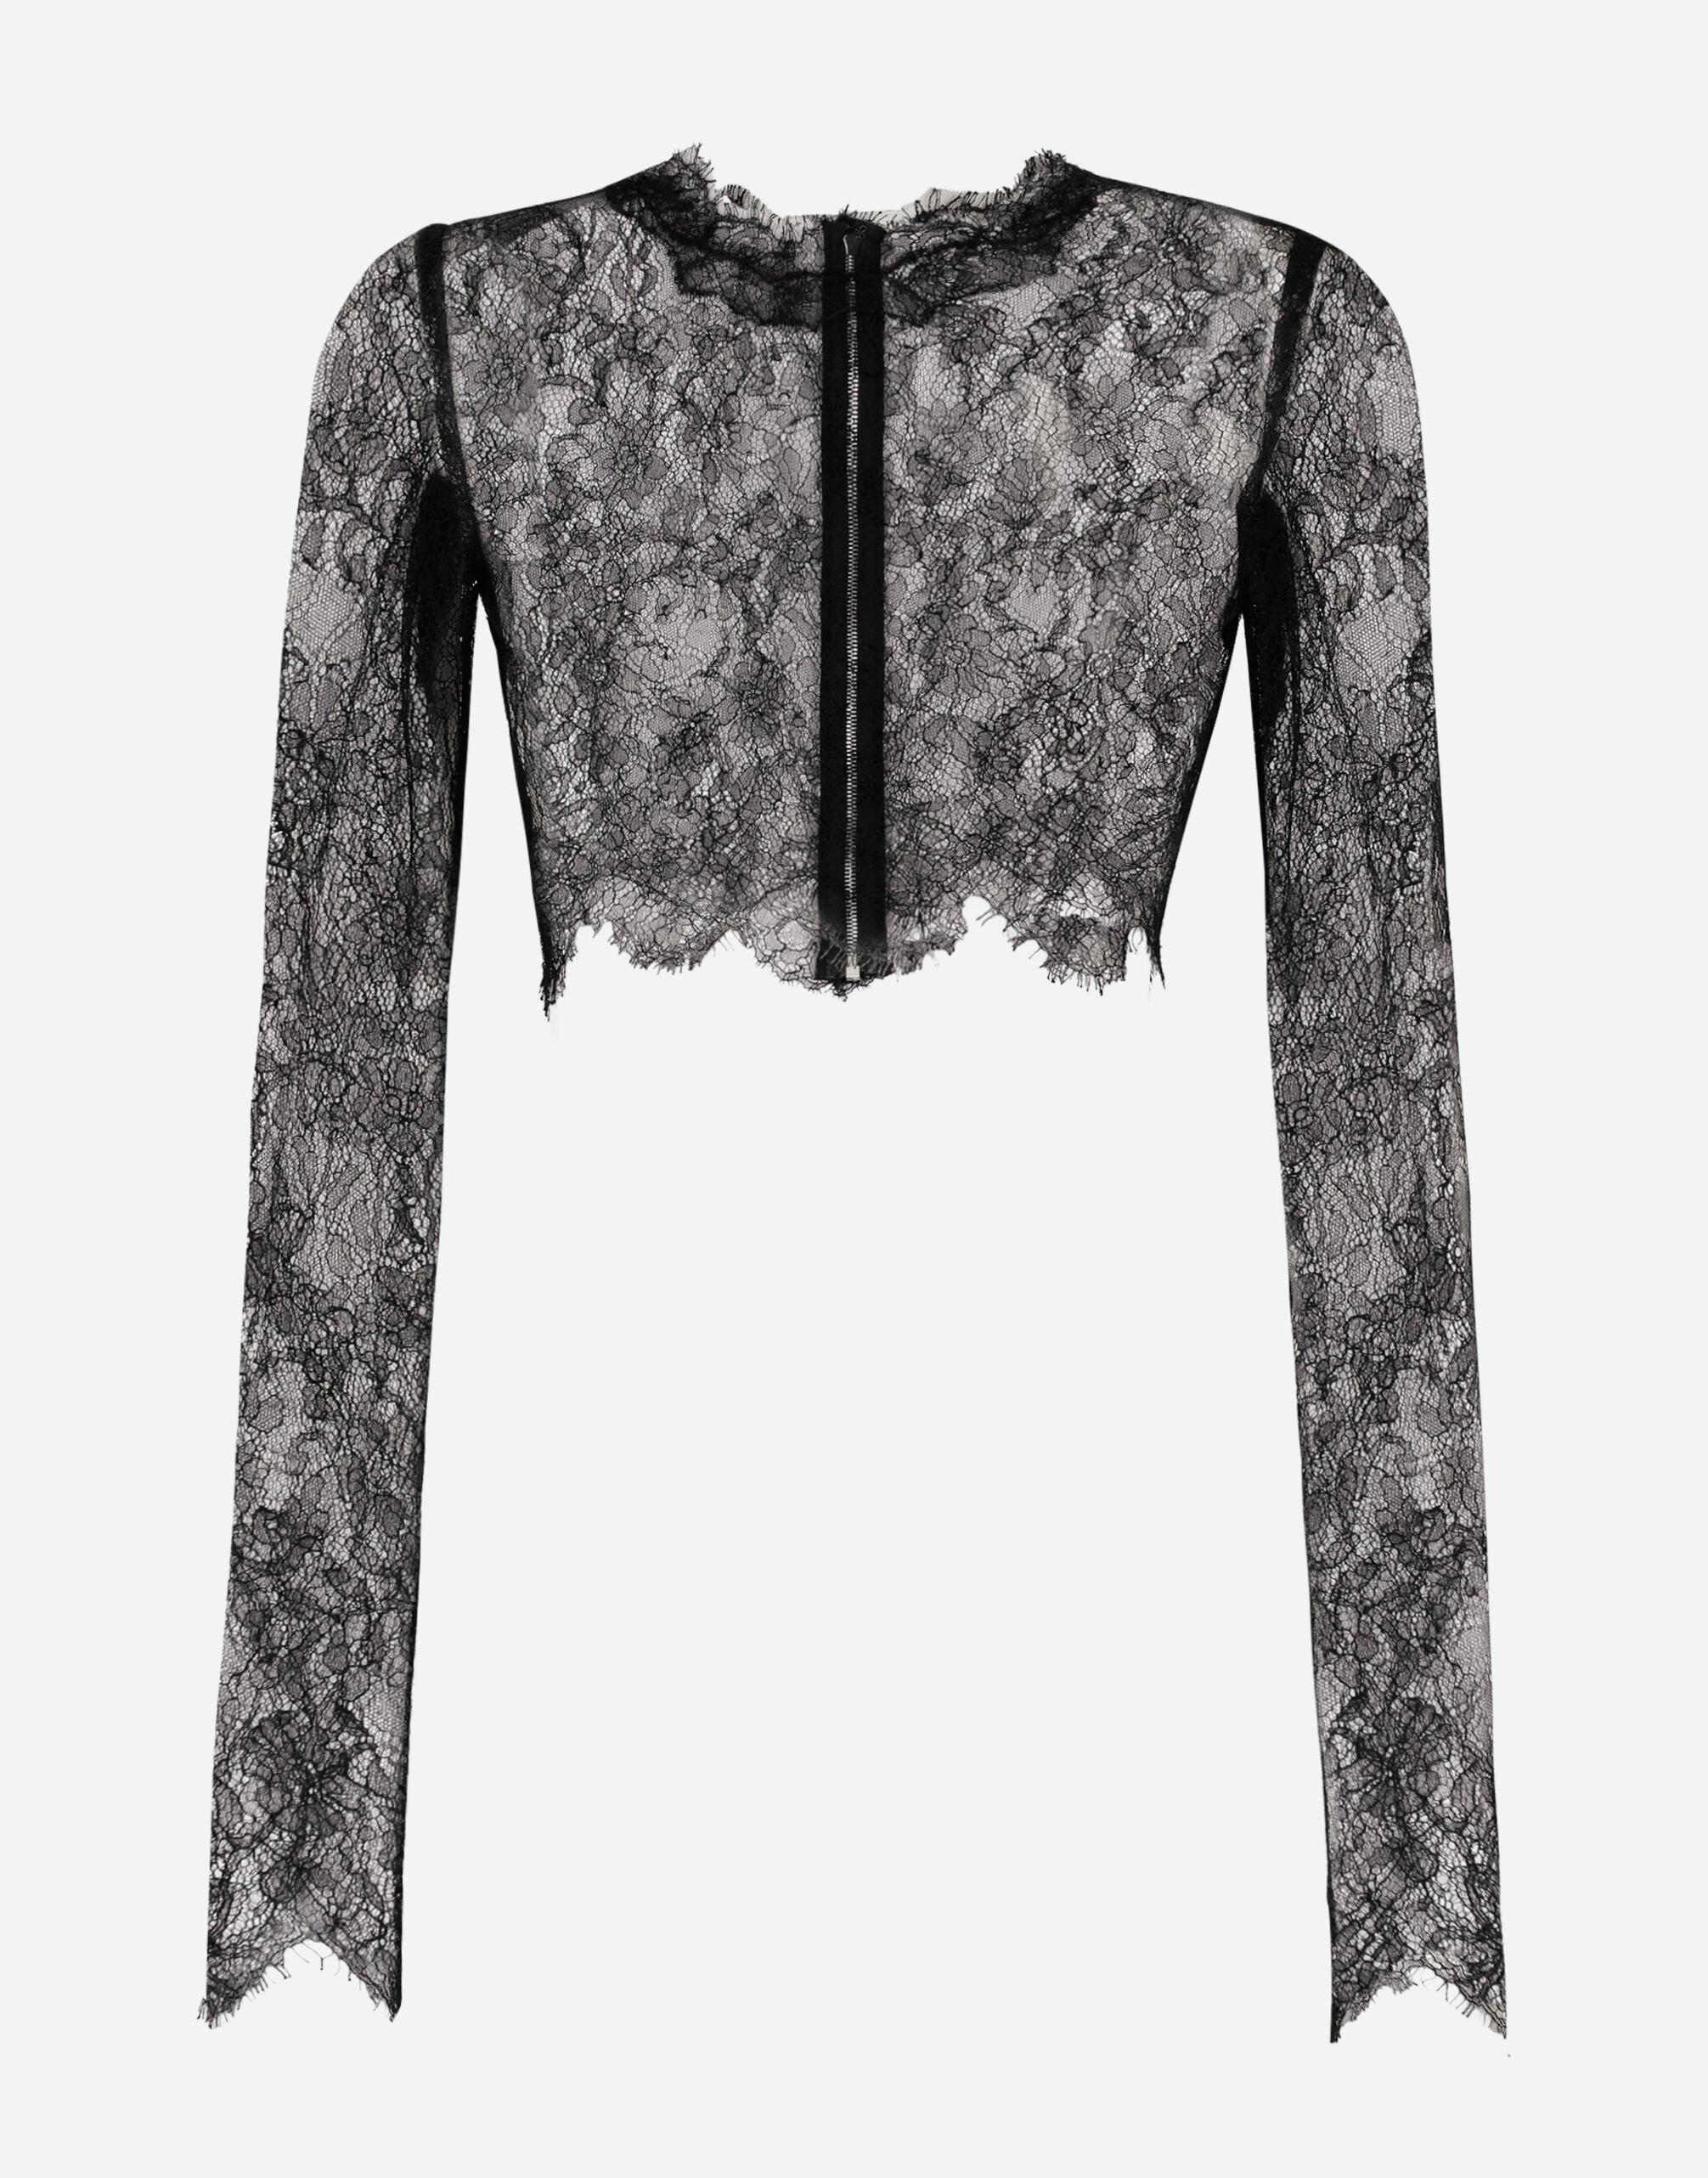 Dolce&Gabbana Long-sleeved Chantilly lace crop top Black FTC17TFUBGB